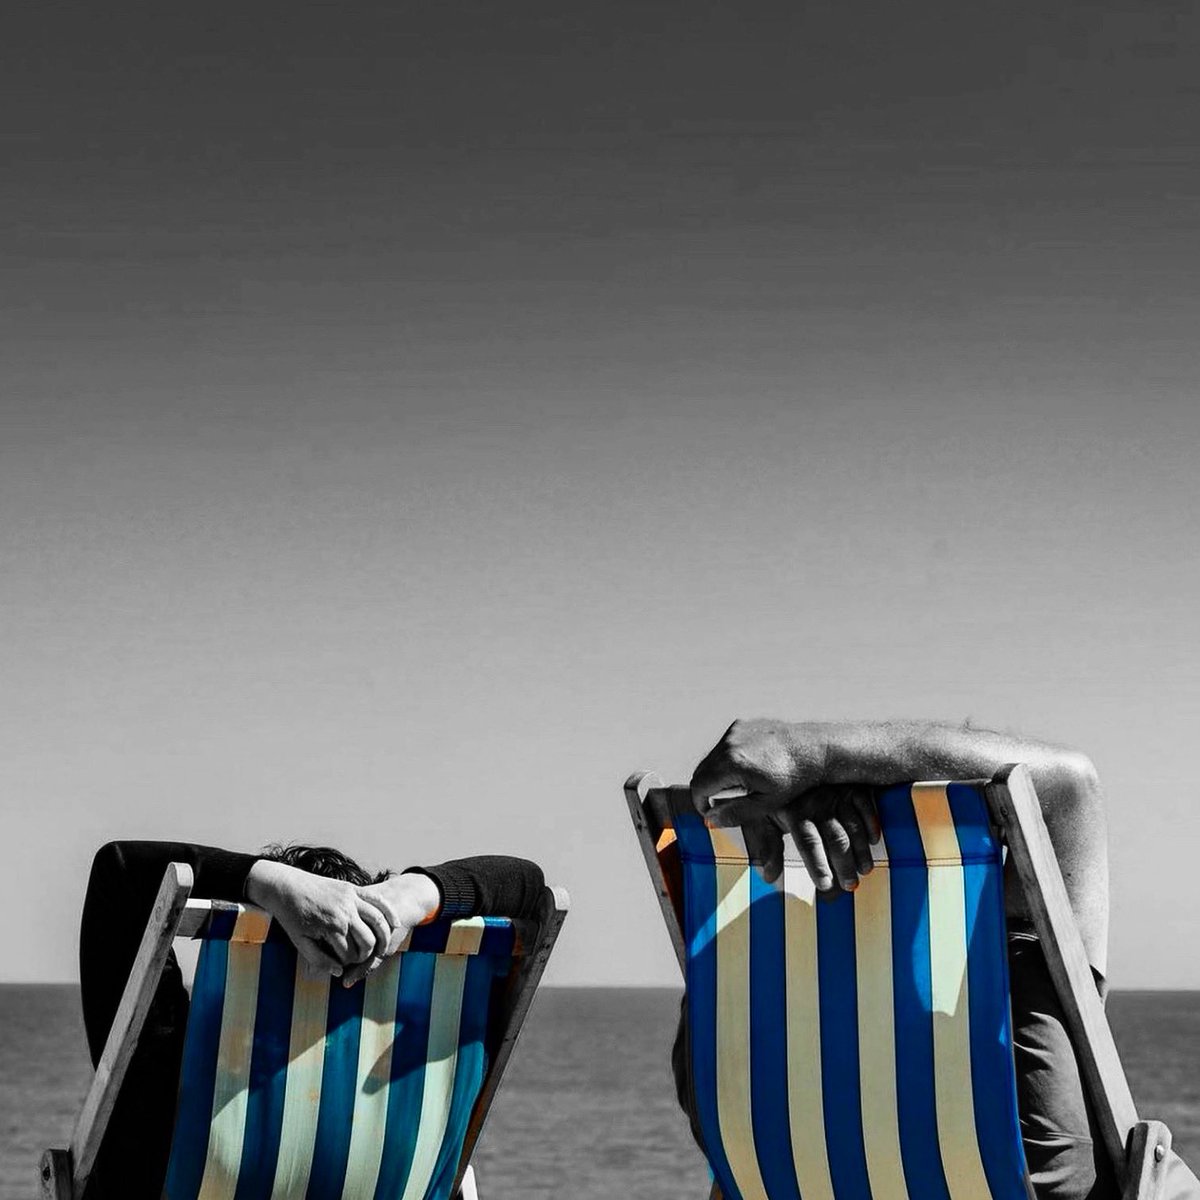 Weekend vibes 🔛

#HawkinsAndBrimblegr #GiaKatheTypo #SummerVibes #Weekend #SummerInGreece #Greece #OneBeautygr